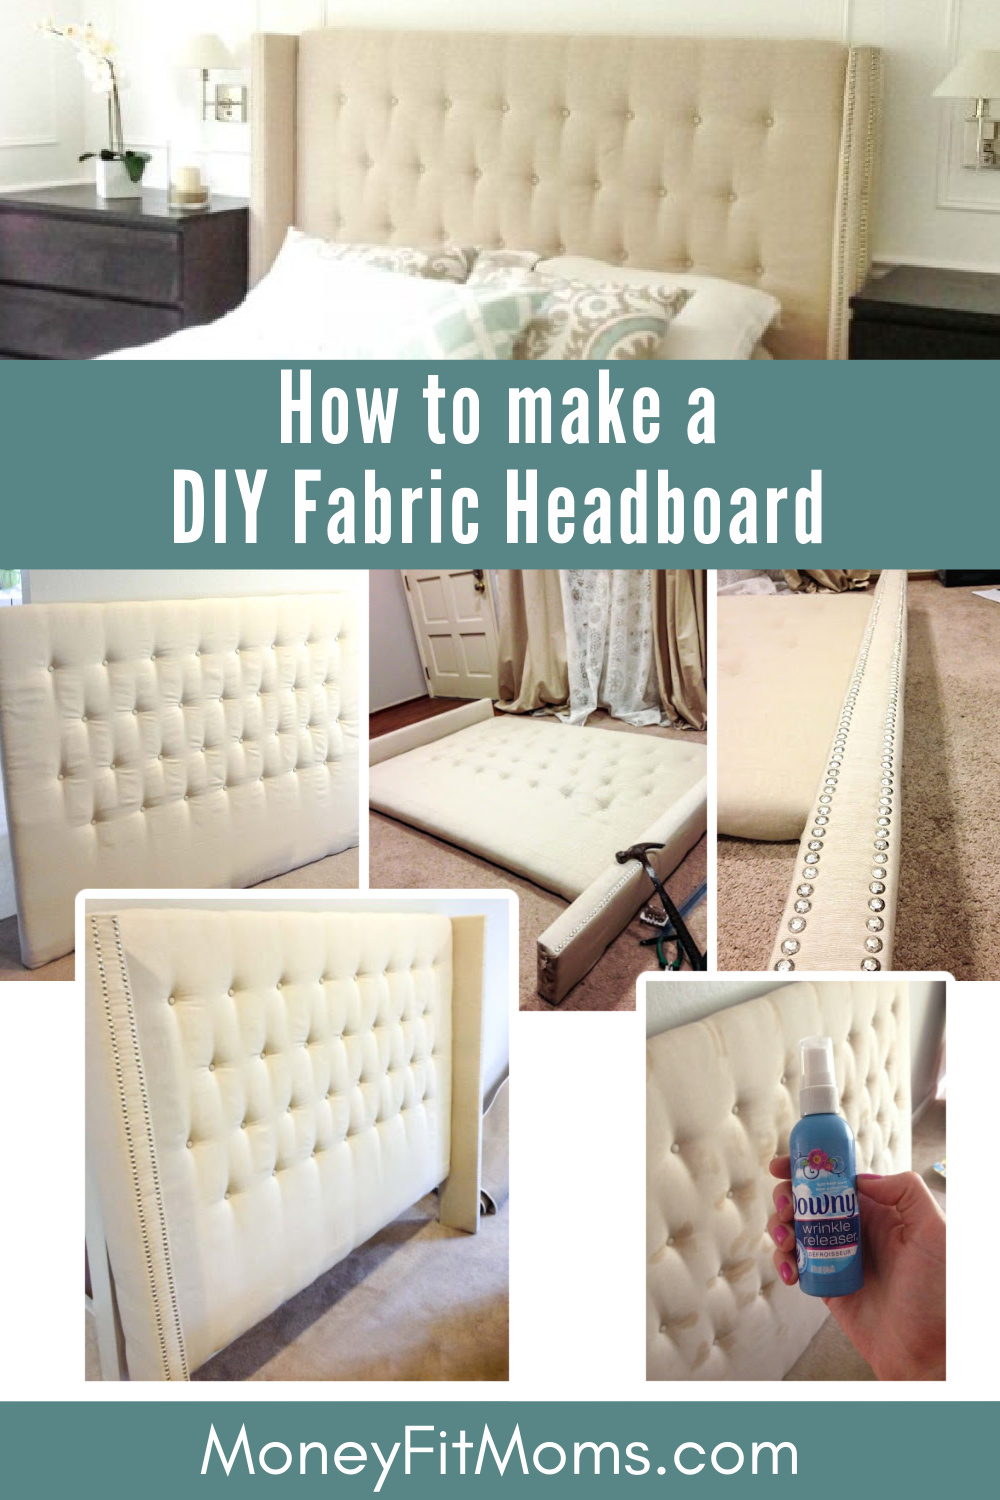 How to DIY Fabric Headboard - MoneyFitMoms.com